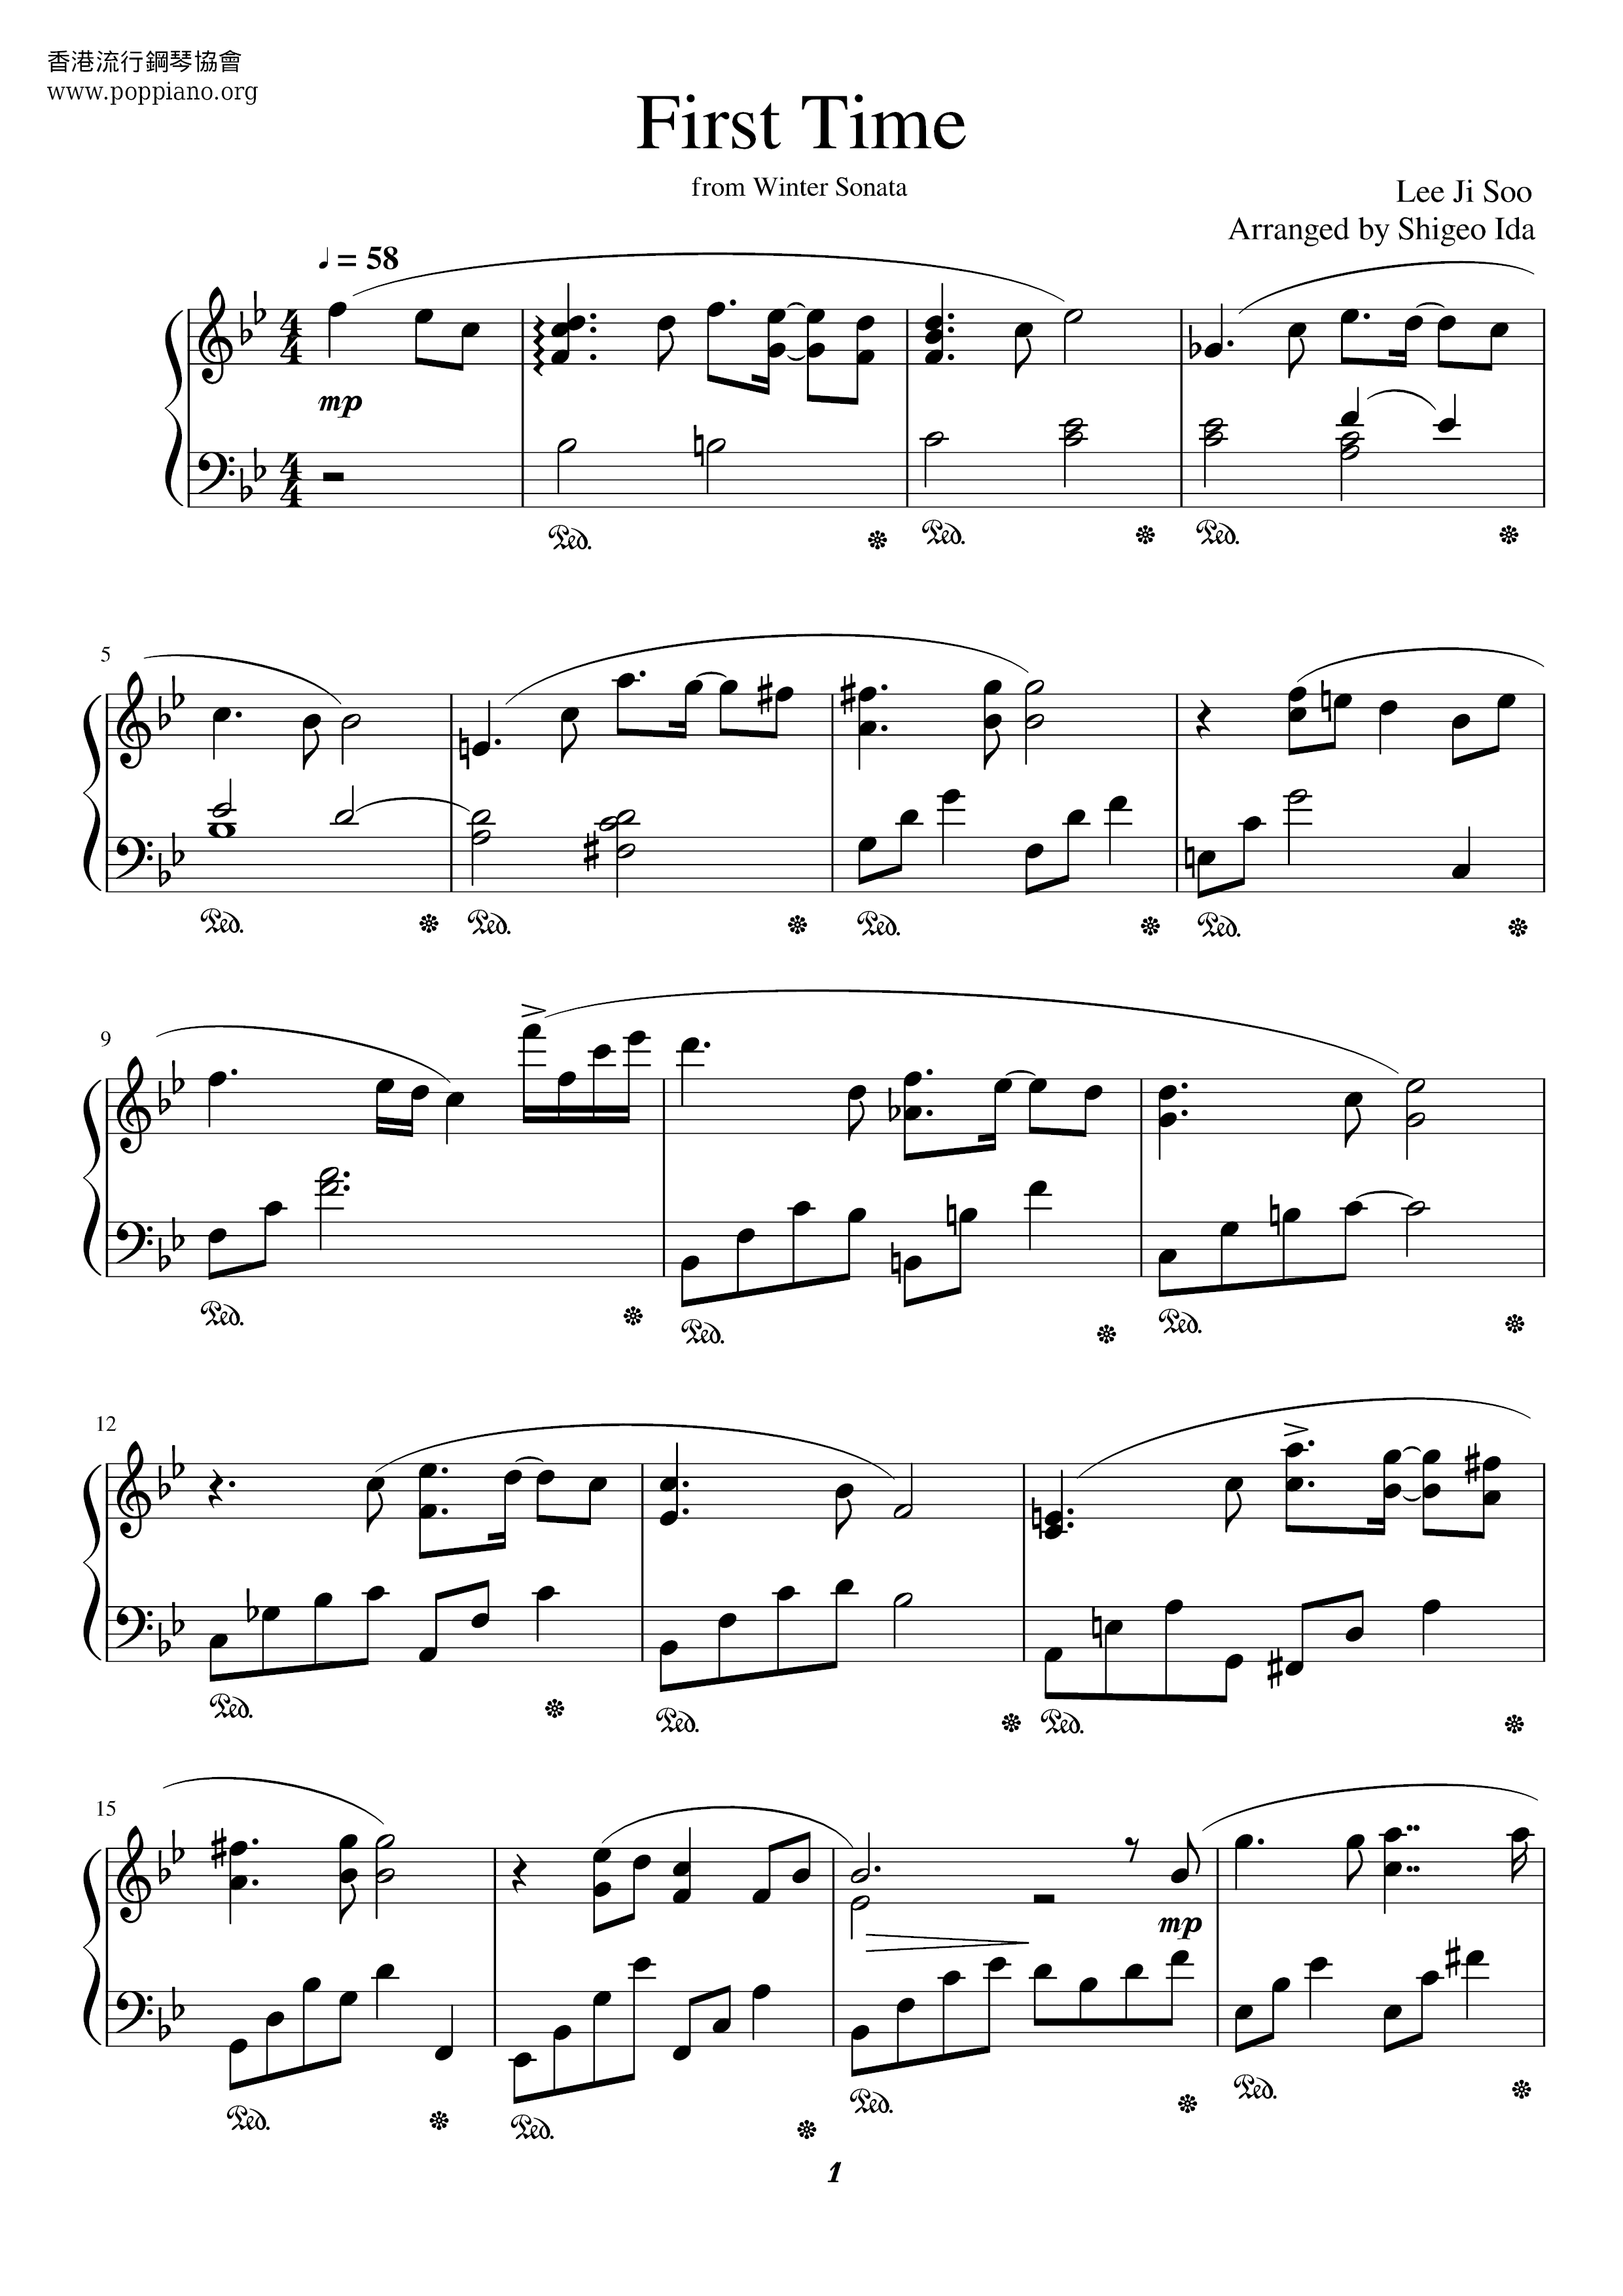 Winter Sonata - First Time Score